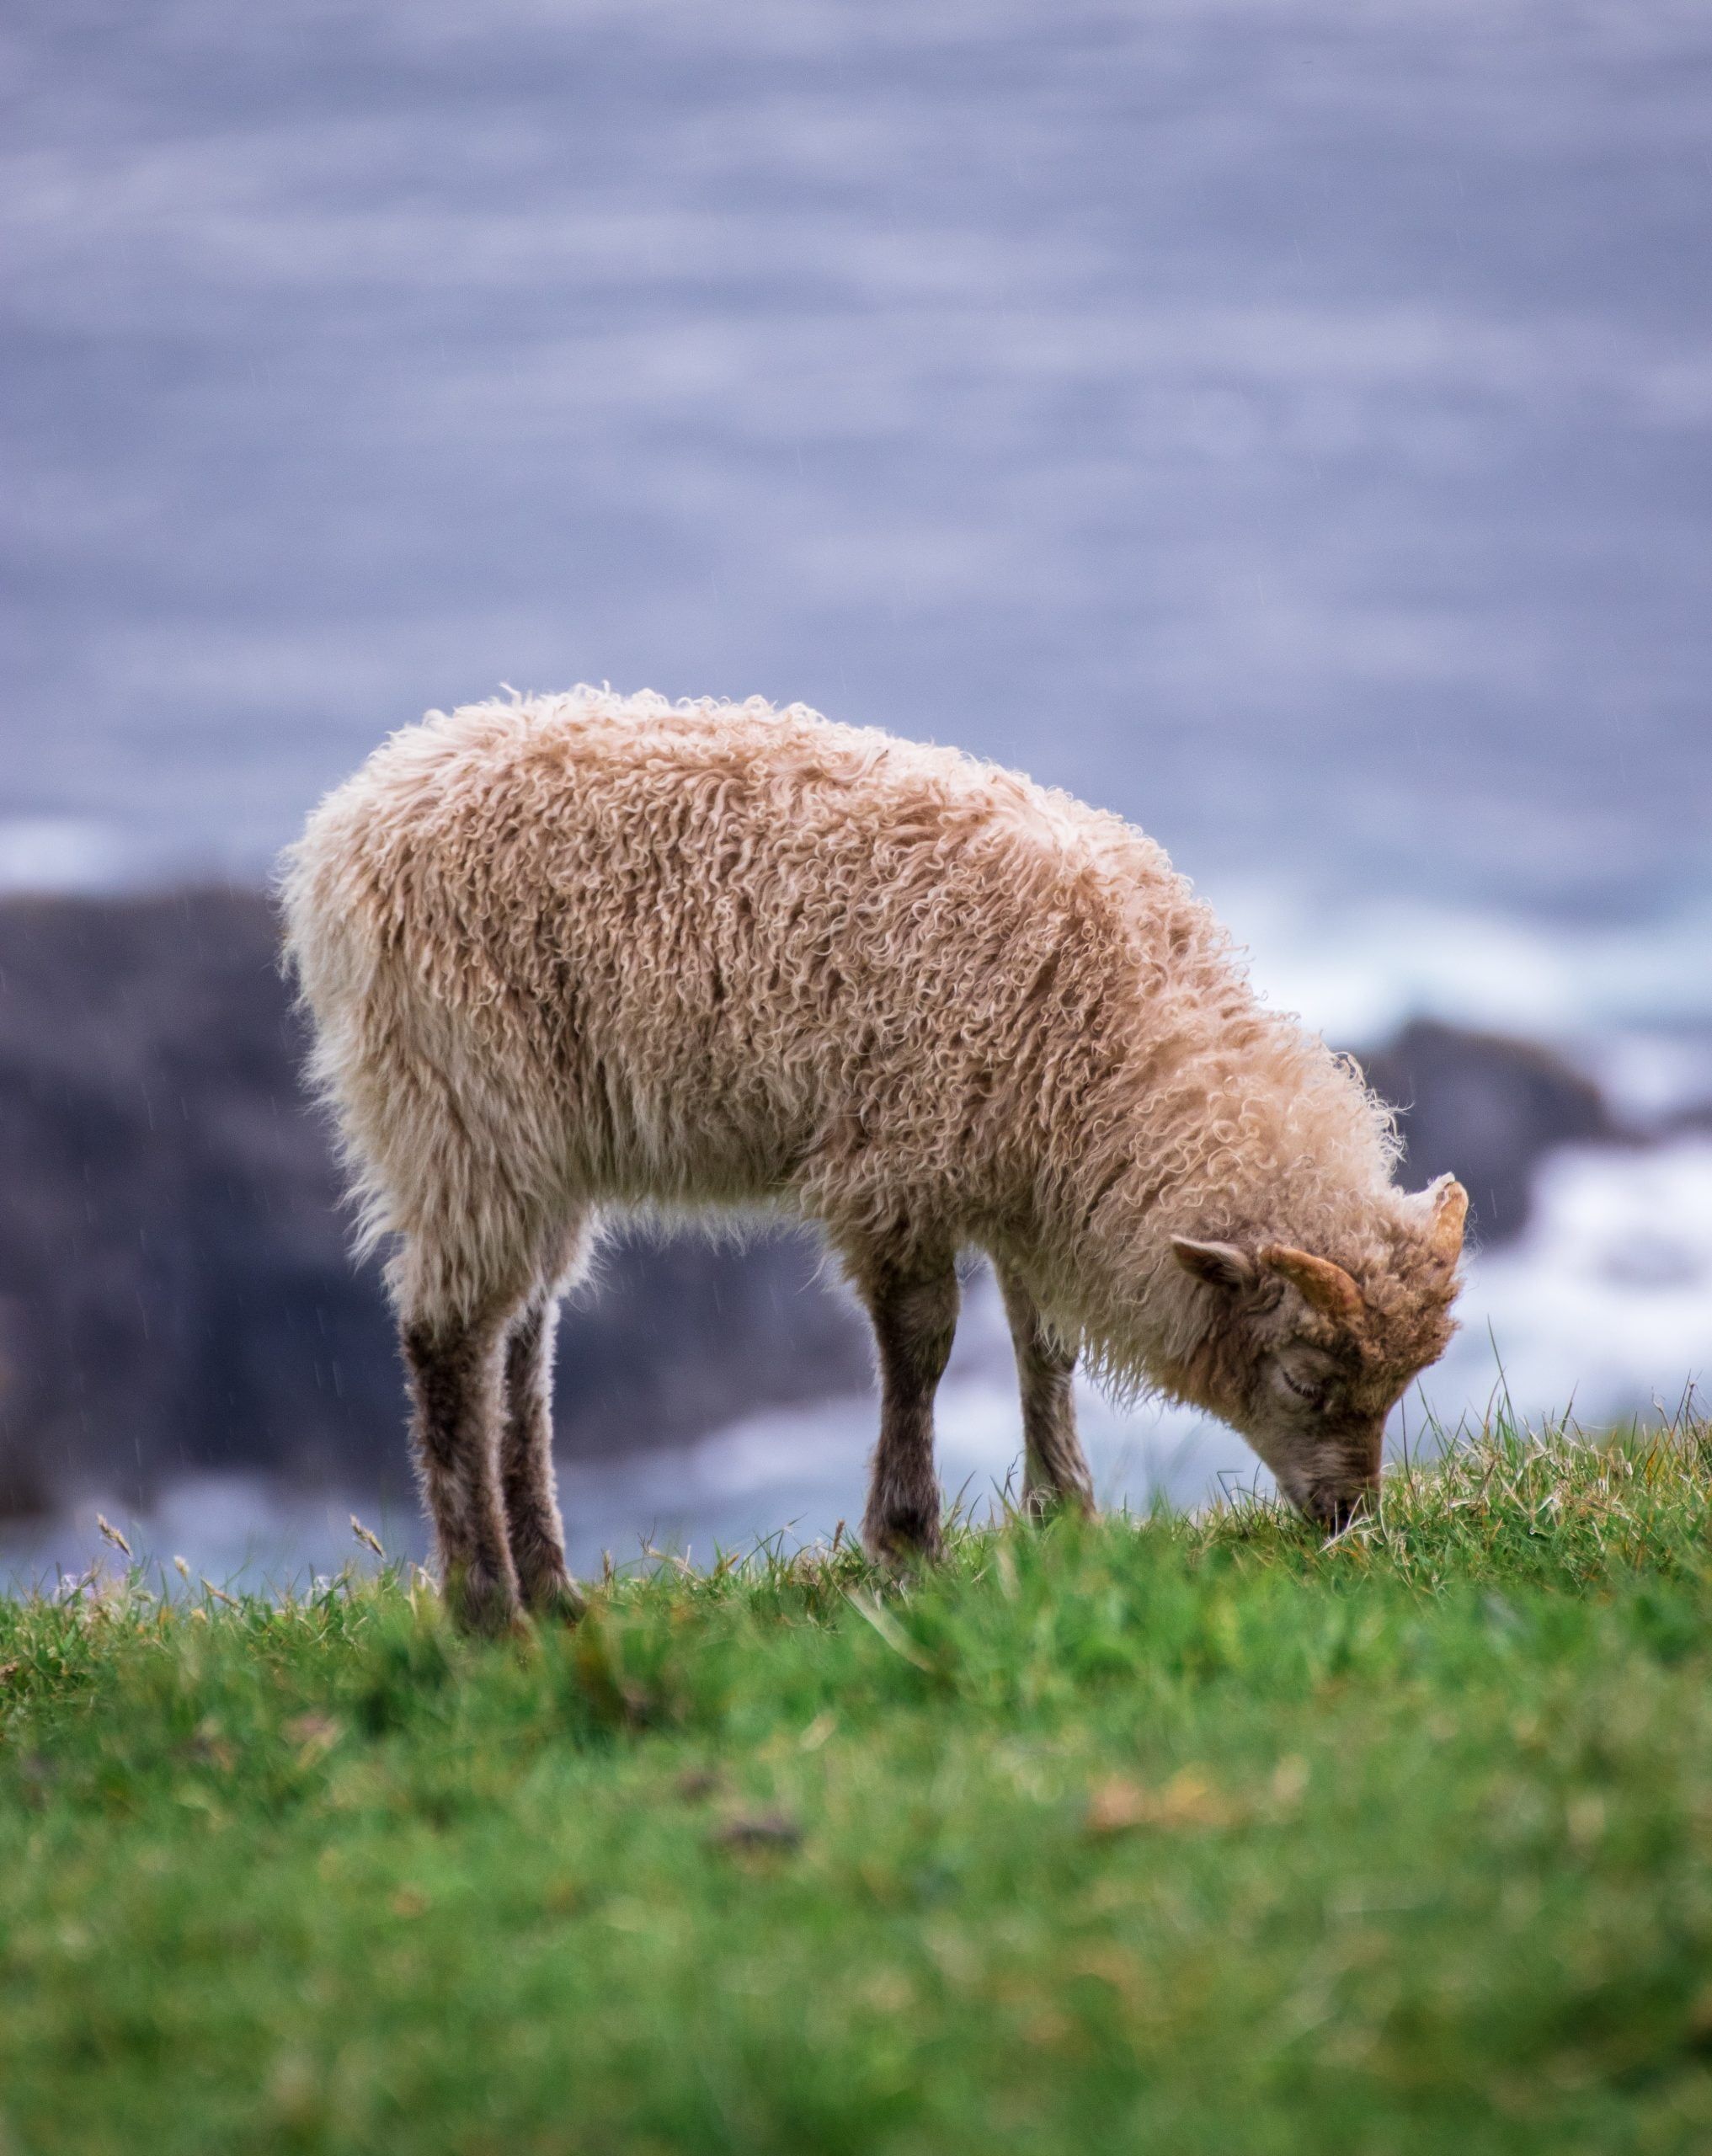 Faroe Islands Sheep: Photo by Tomáš Malík